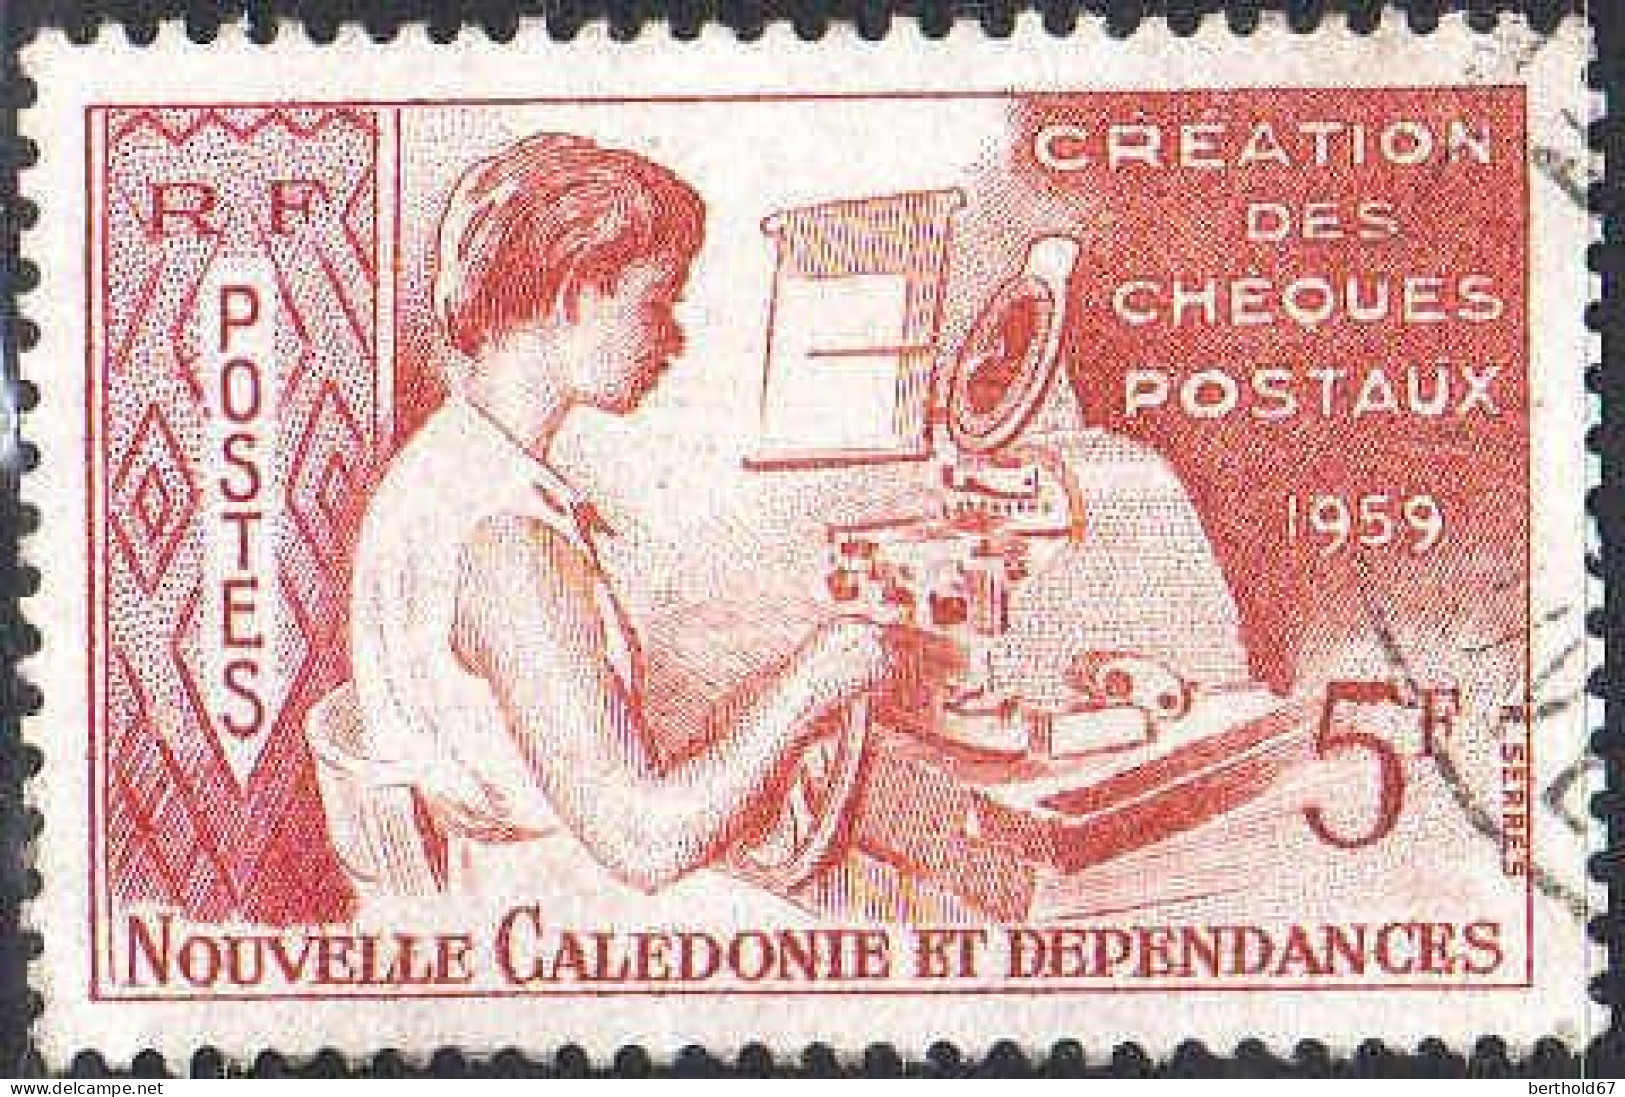 Nle-Calédonie Poste Obl Yv: 296 Mi:371 Création Des Cheques Postaux (Beau Cachet Rond) - Used Stamps